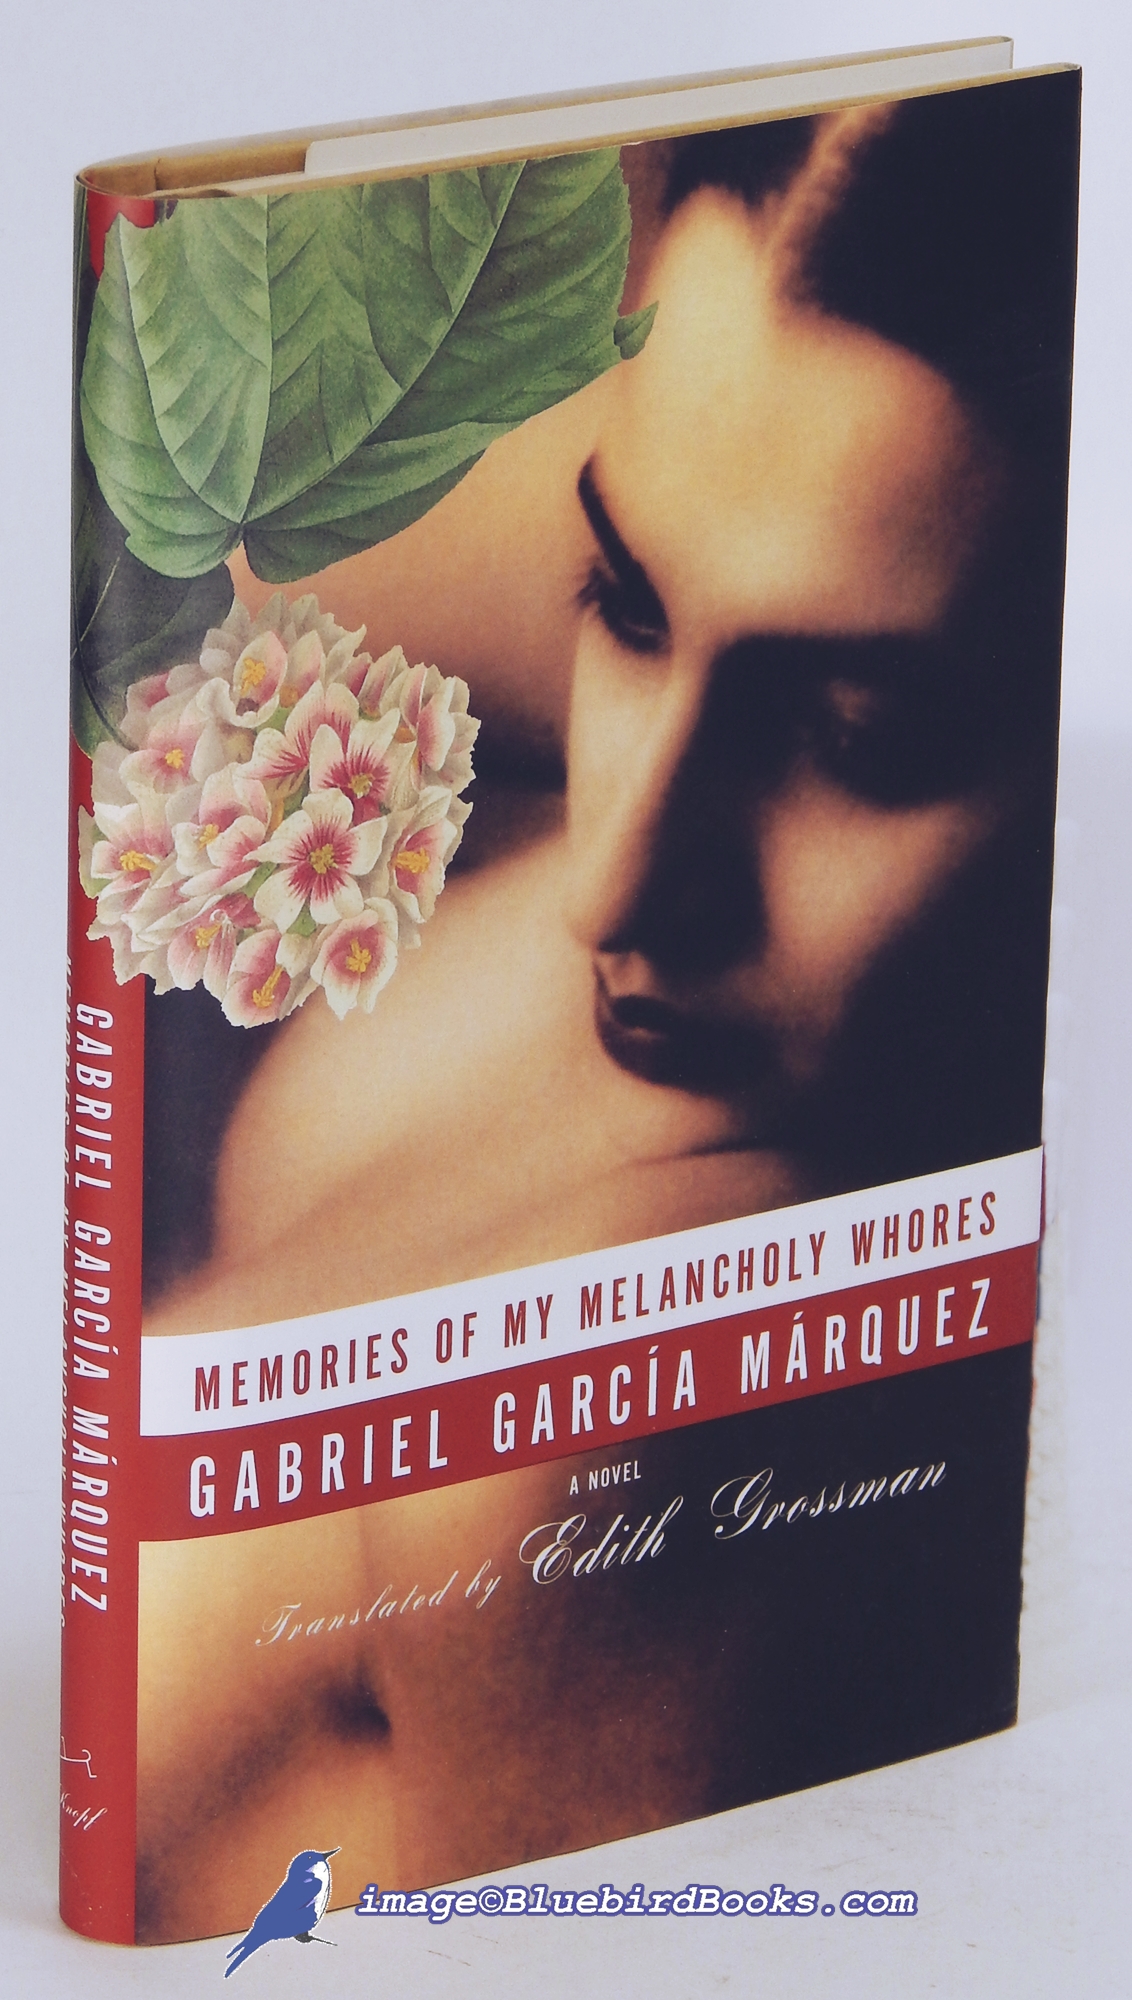 MRQUEZ, GABRIEL GARCA - Memories of My Melancholy Whores